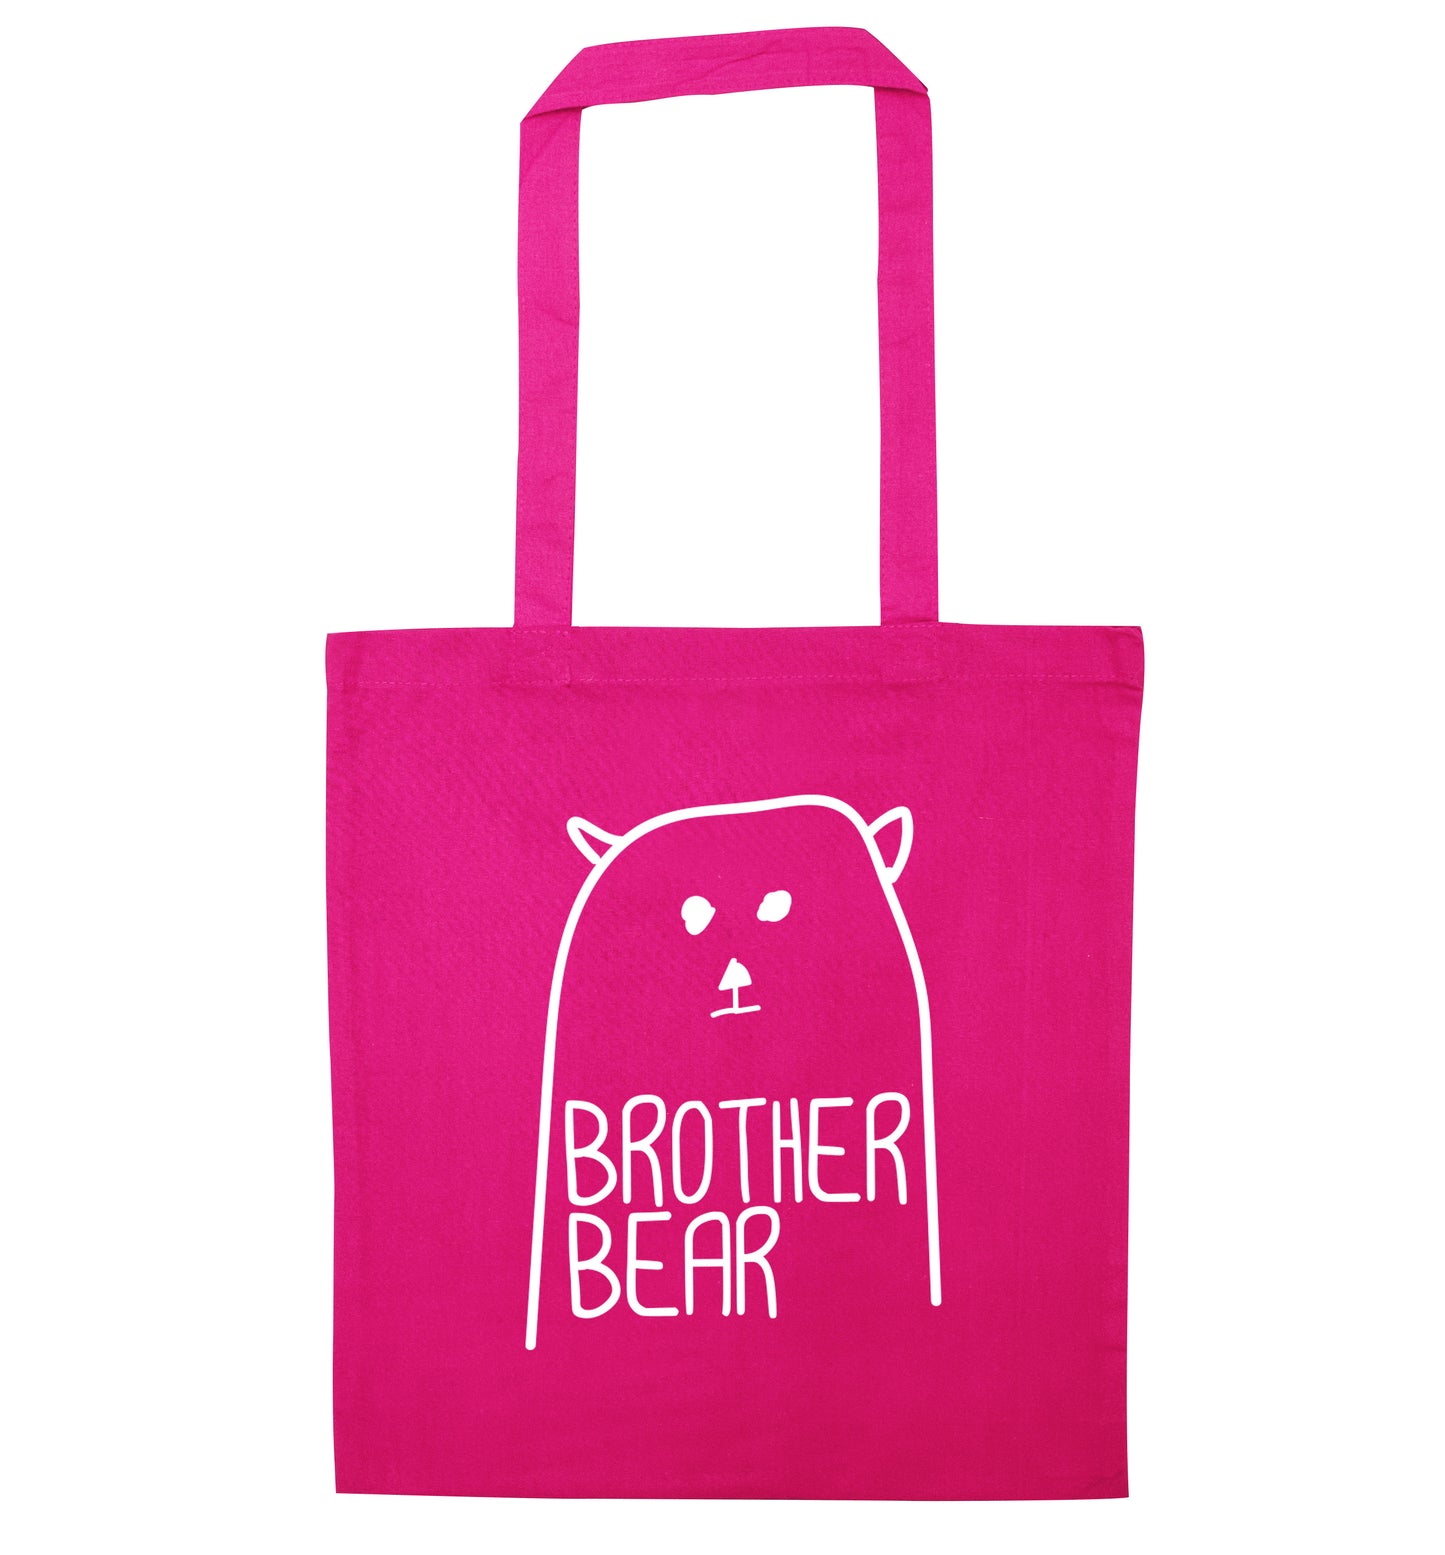 Brother bear pink tote bag